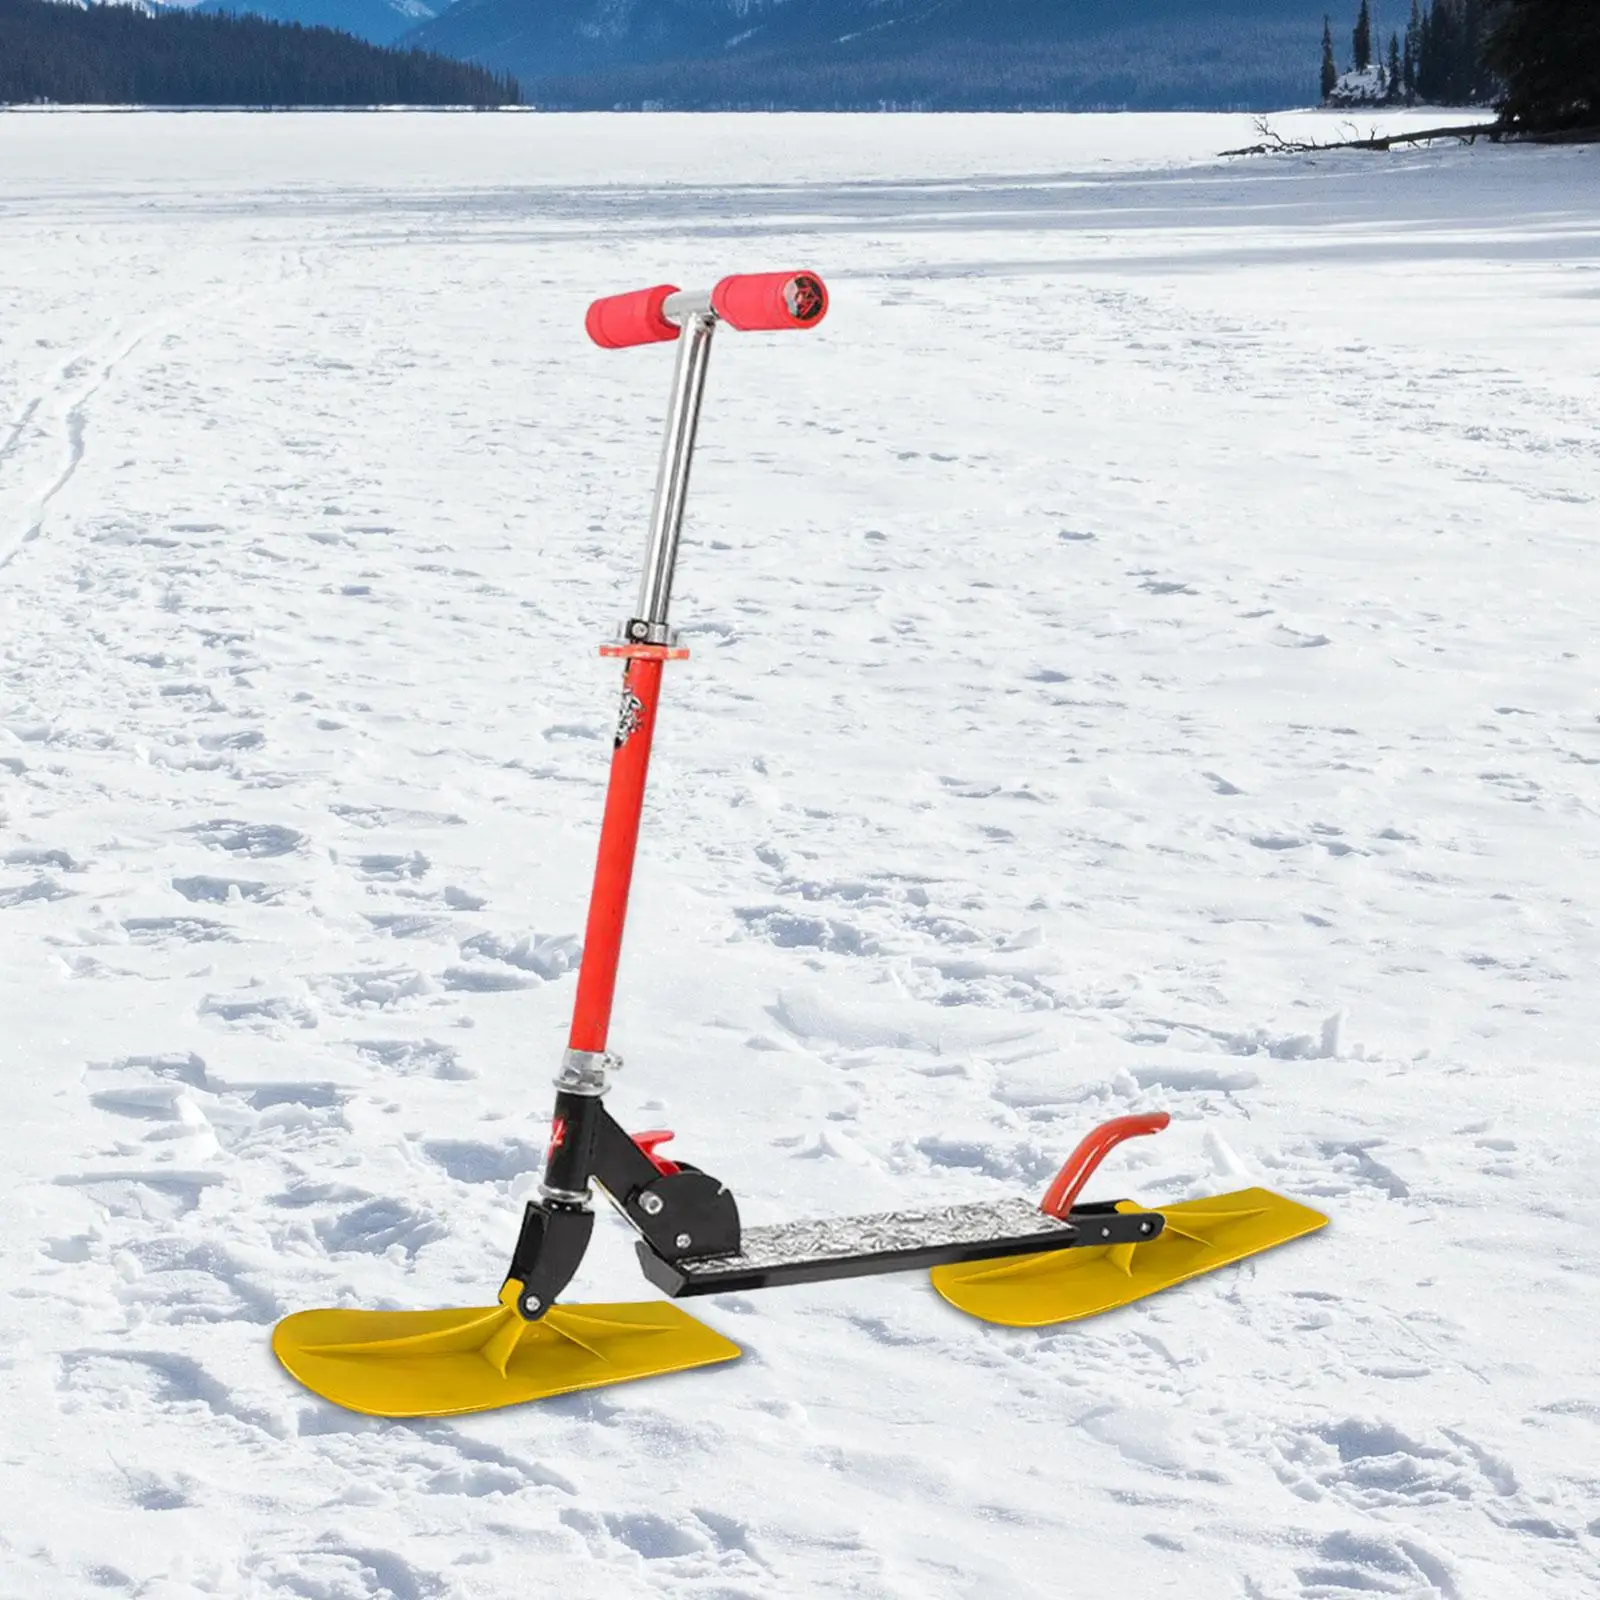 2x Snow Sled Ski Scooter Kit Ski Board Sleigh for Game Toys Skiing Outdoor